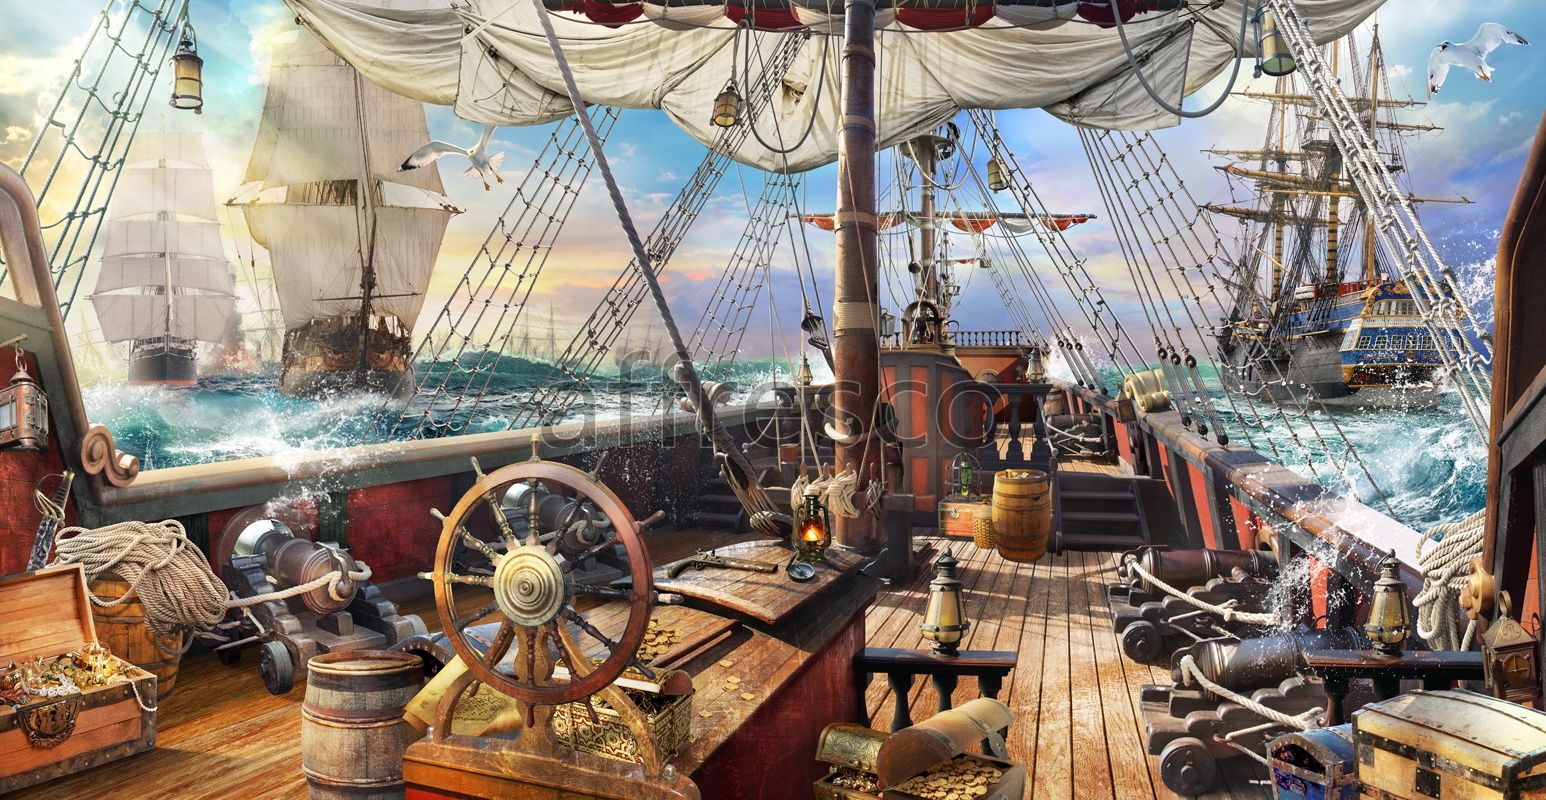 Pirate Ship Deck Background